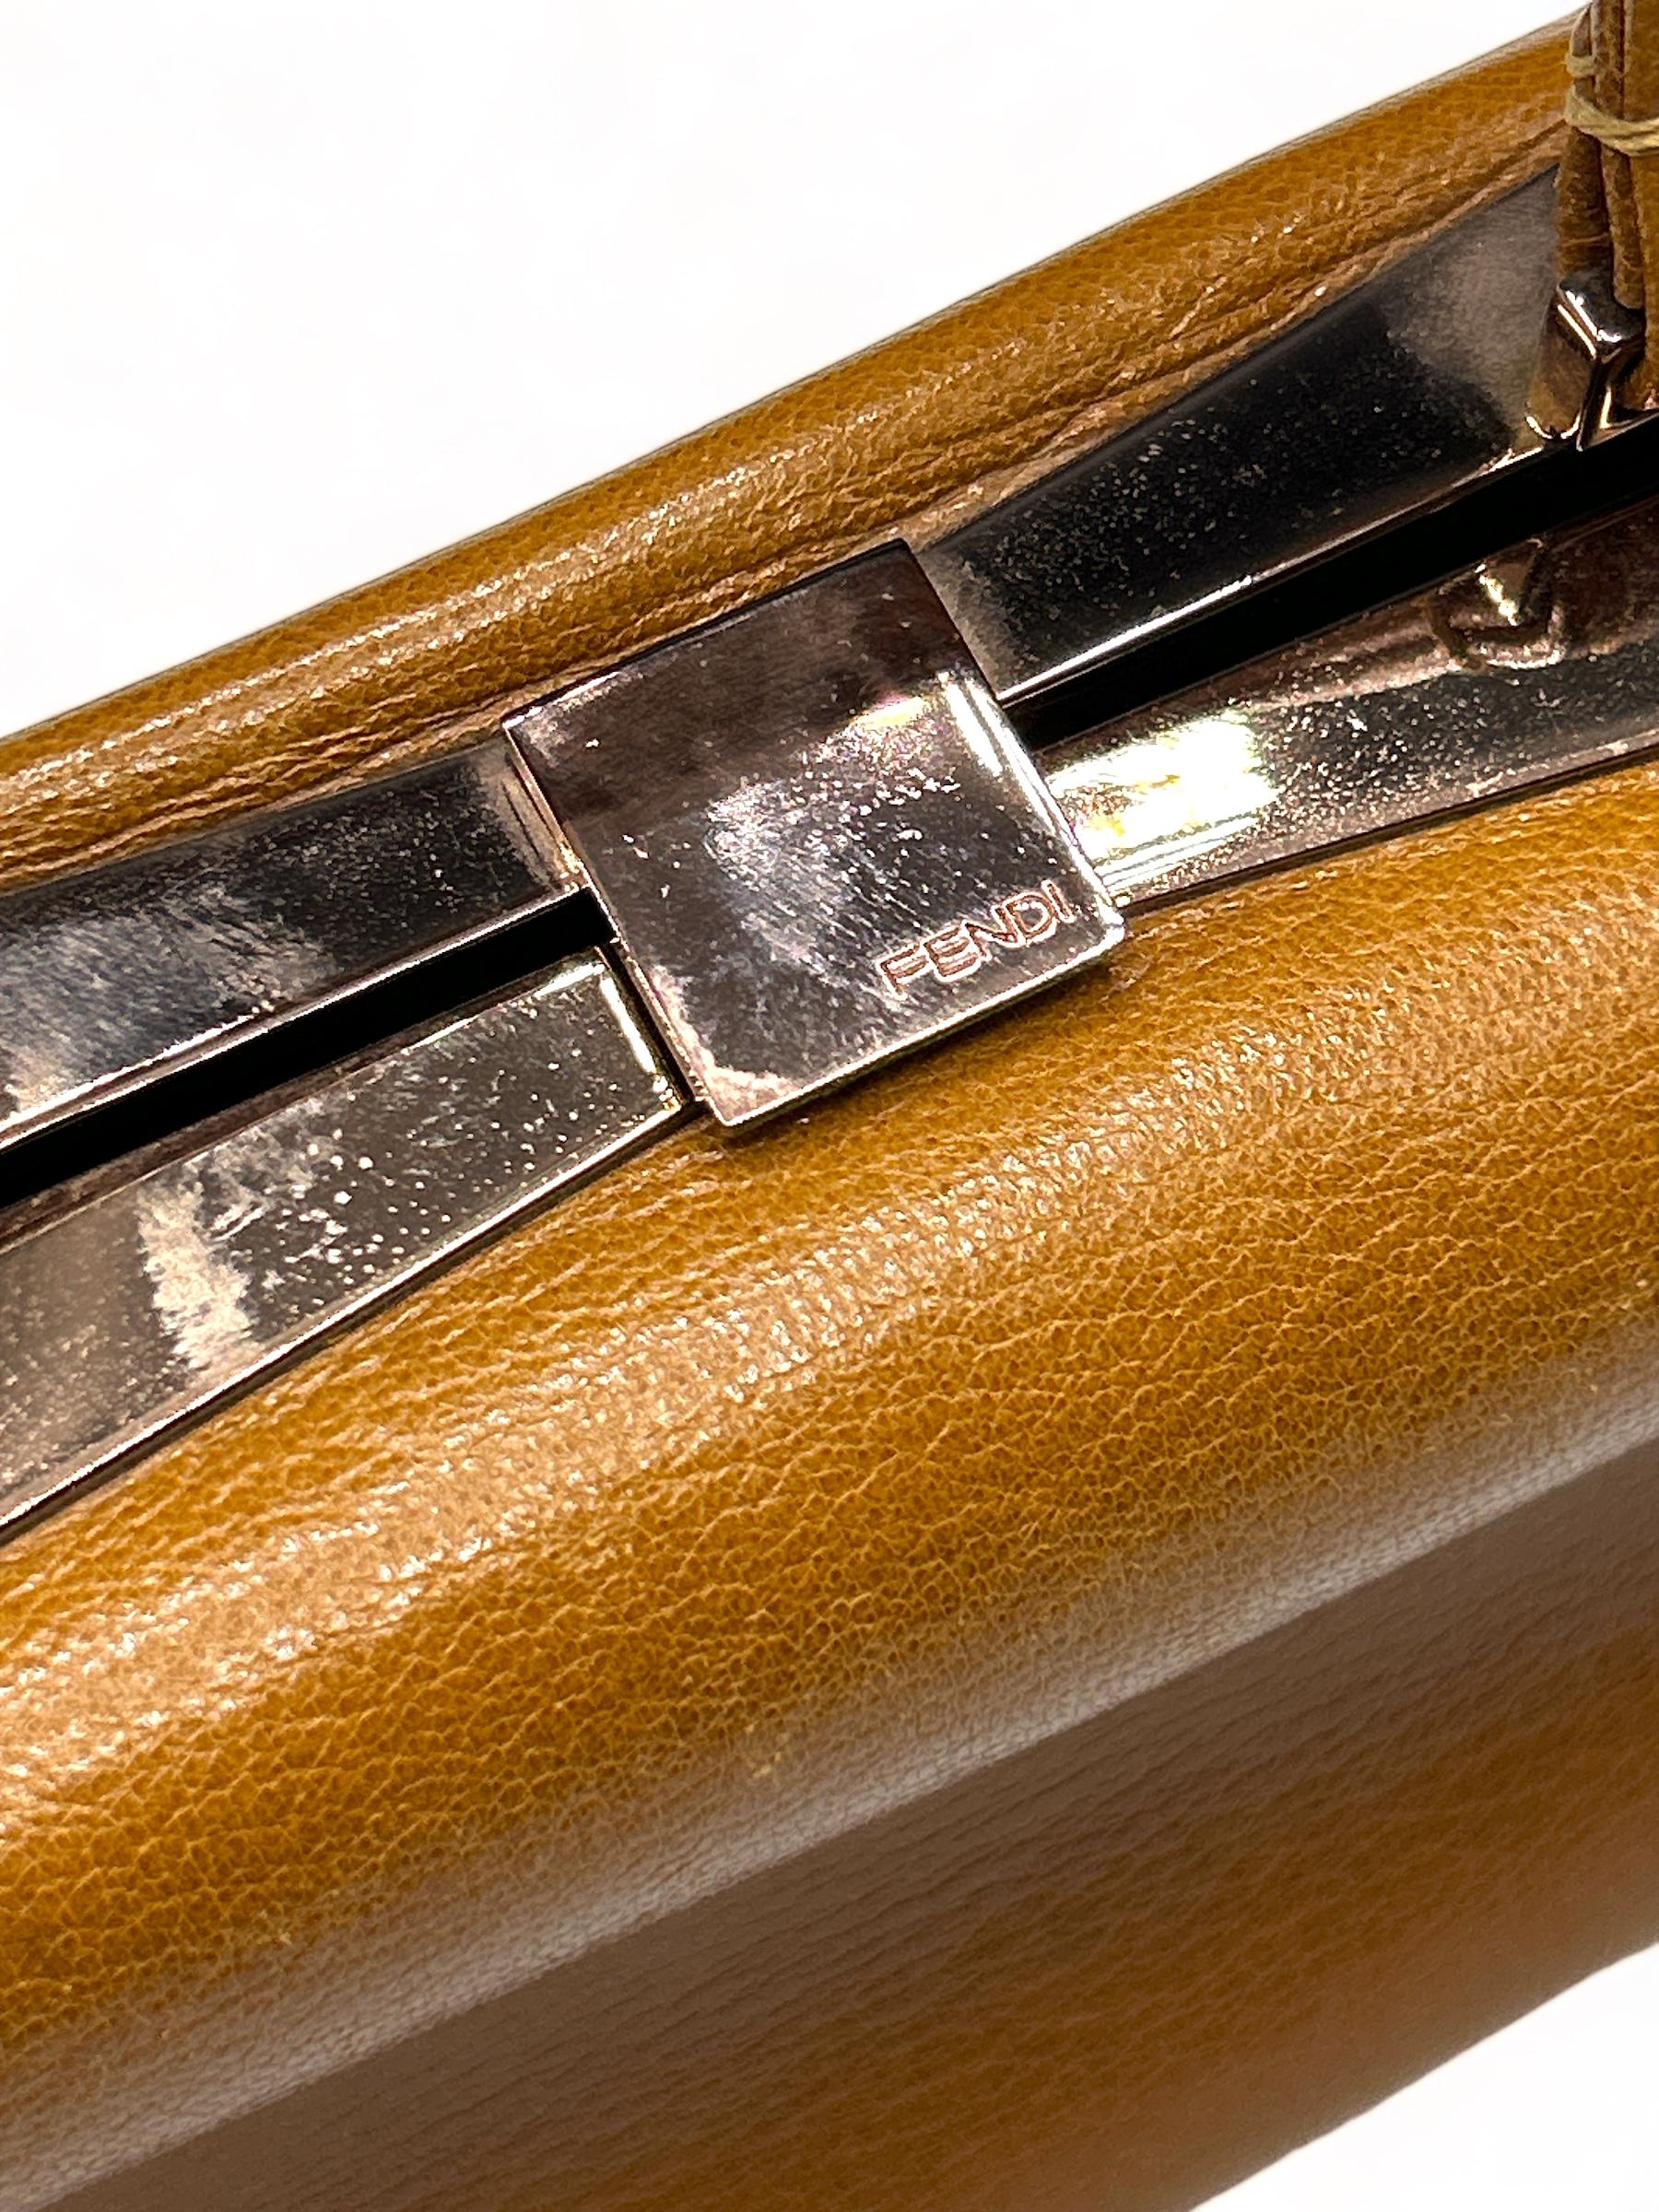 Leather Women's handbag